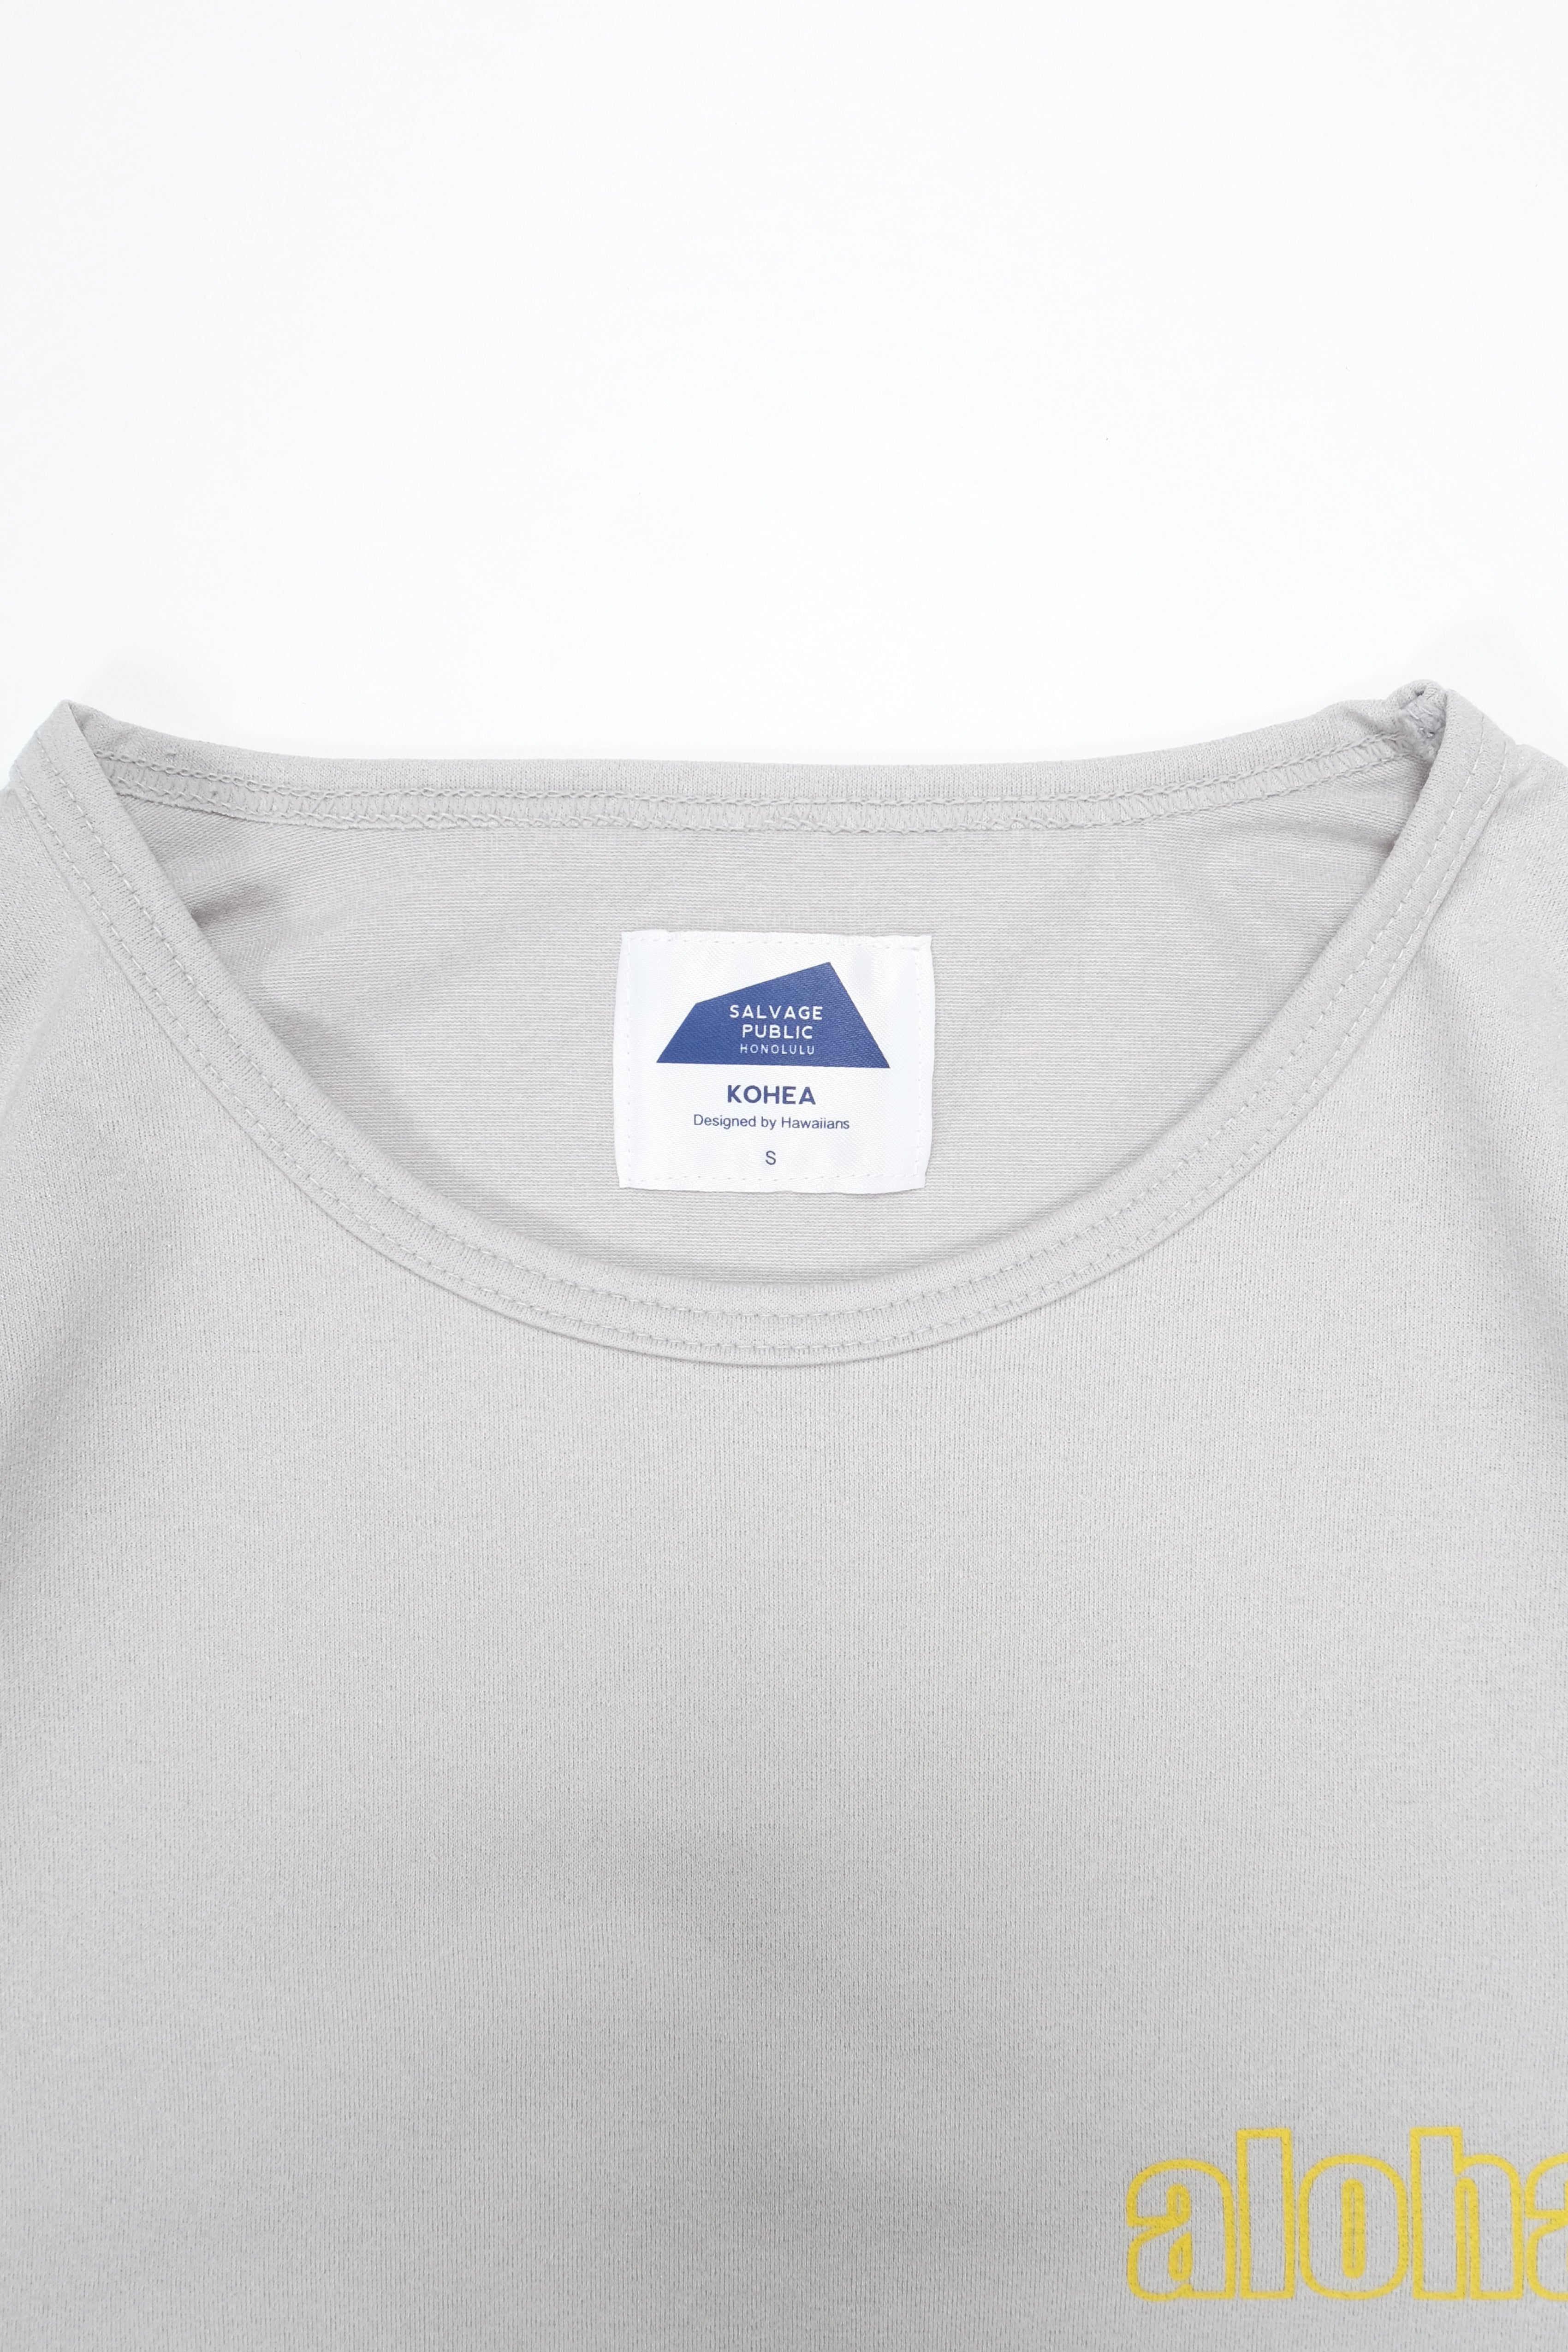 Long Sleeve Surf T-Shirt - Aloha - Smoke Grey